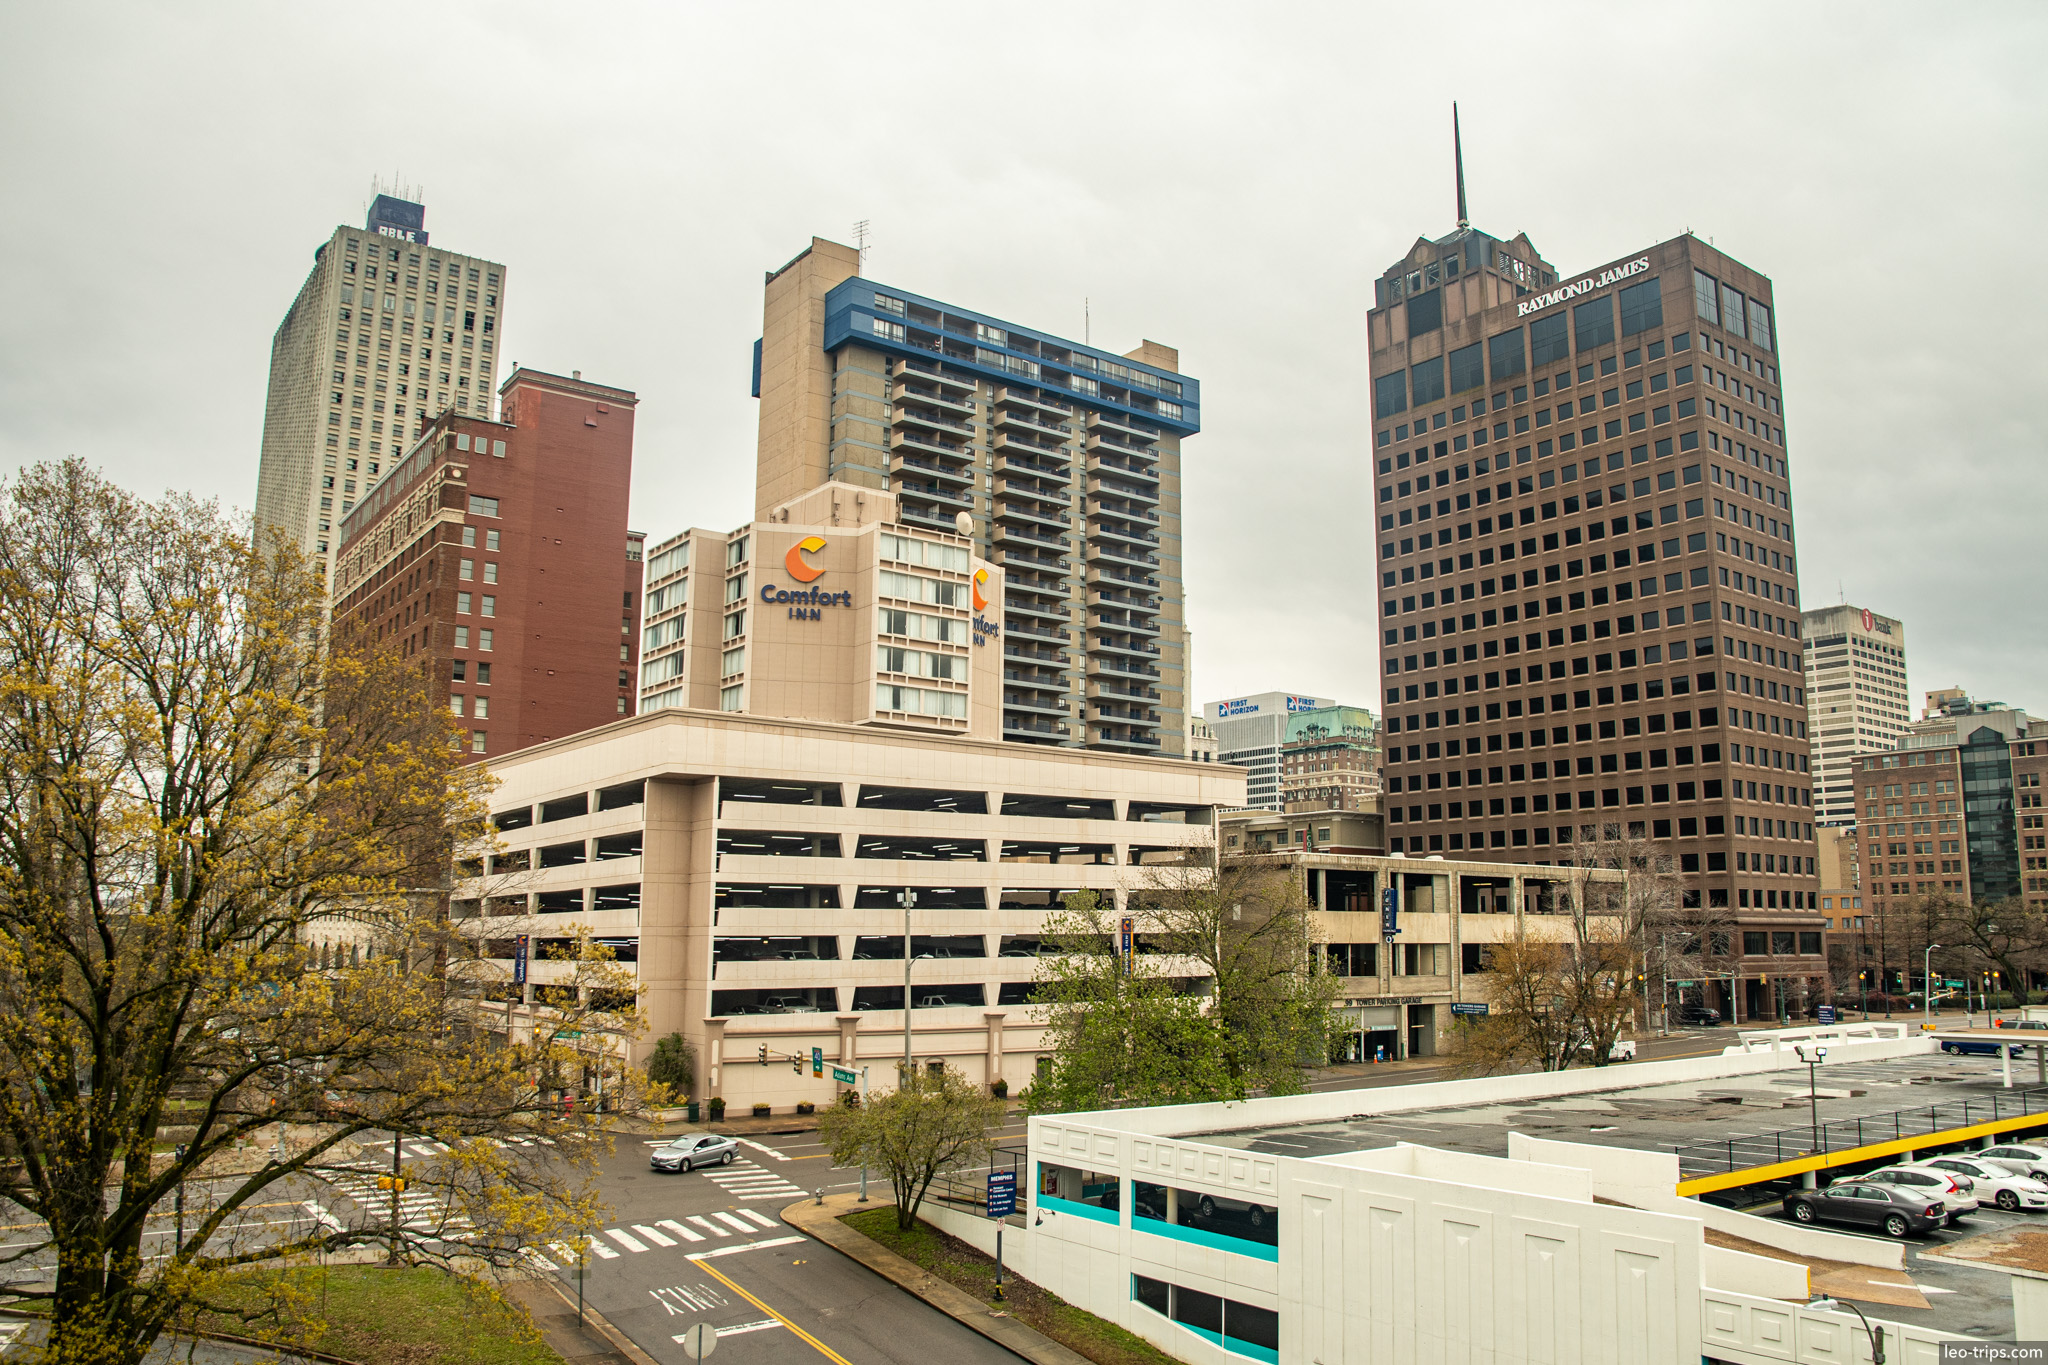 View to Downtown Memphis memphis